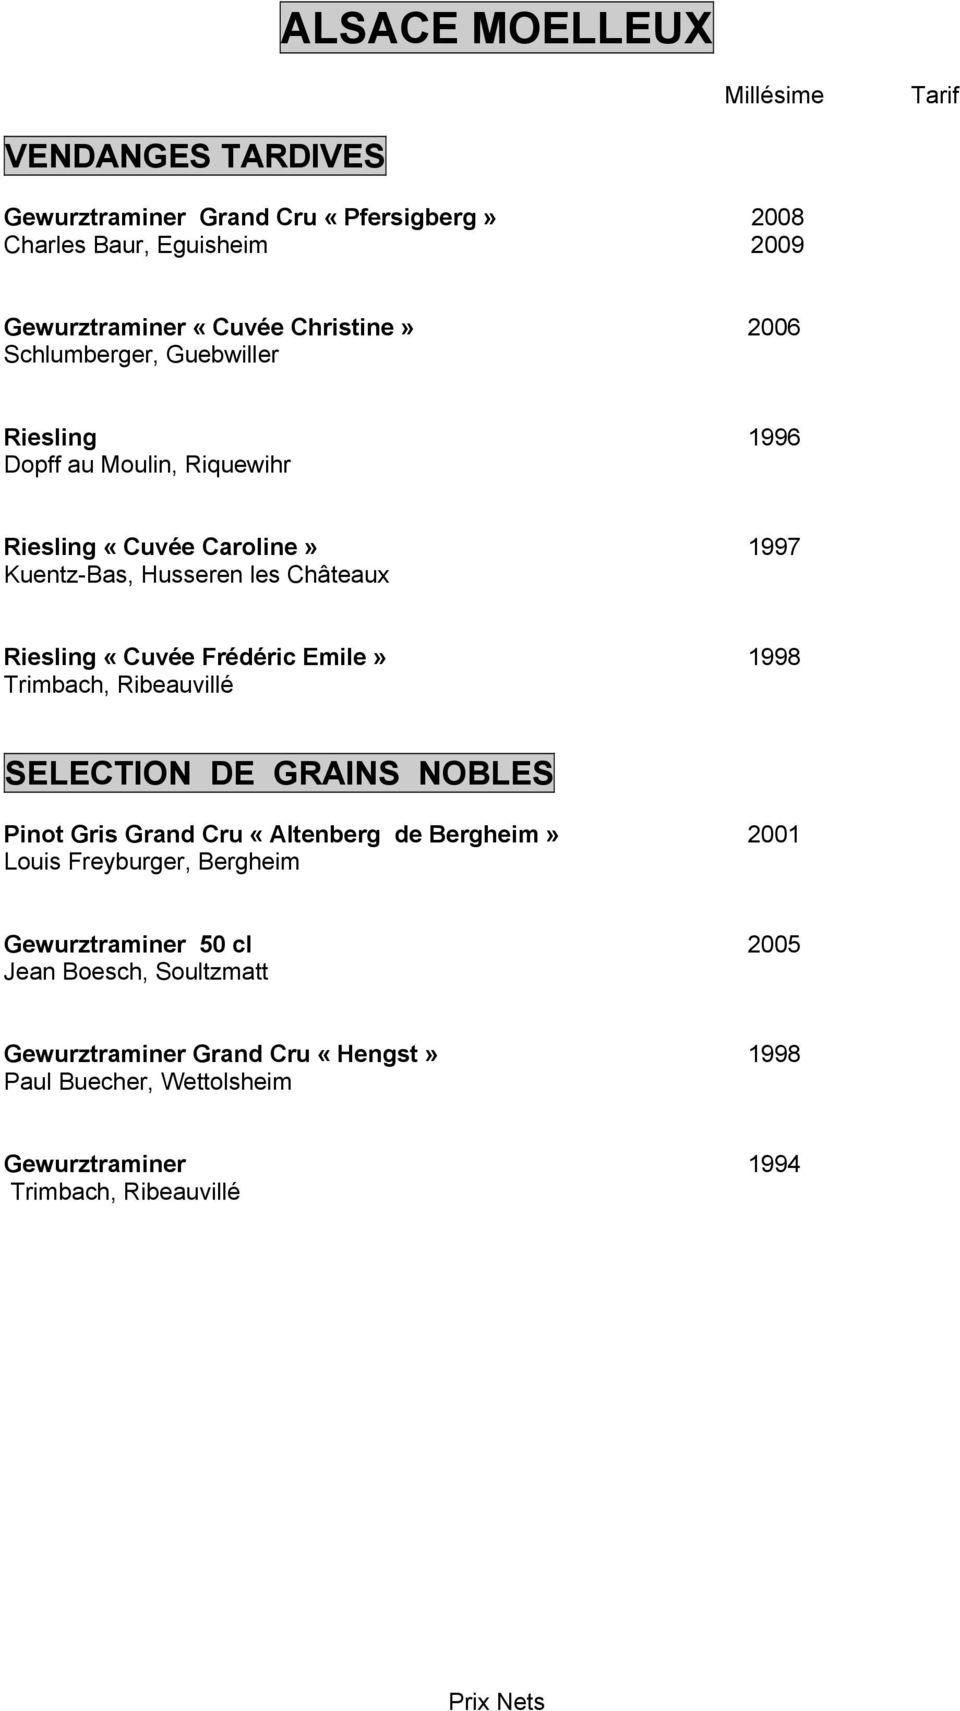 Frédéric Emile» 1998 Trimbach, Ribeauvillé SELECTION DE GRAINS NOBLES Pinot Gris Grand Cru «Altenberg de Bergheim» 2001 Louis Freyburger, Bergheim